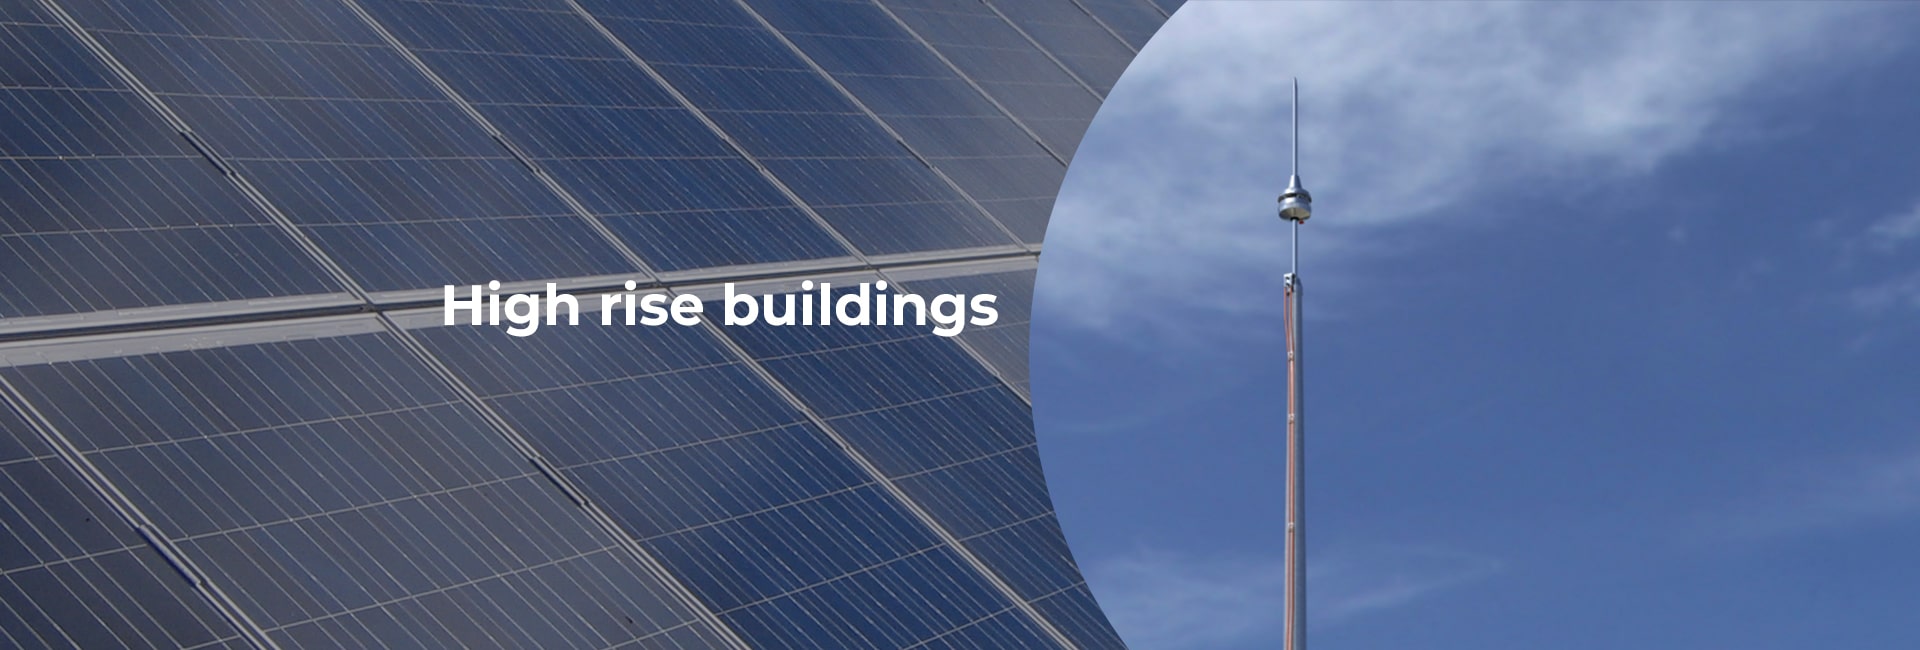 Solar Power plant EPC company